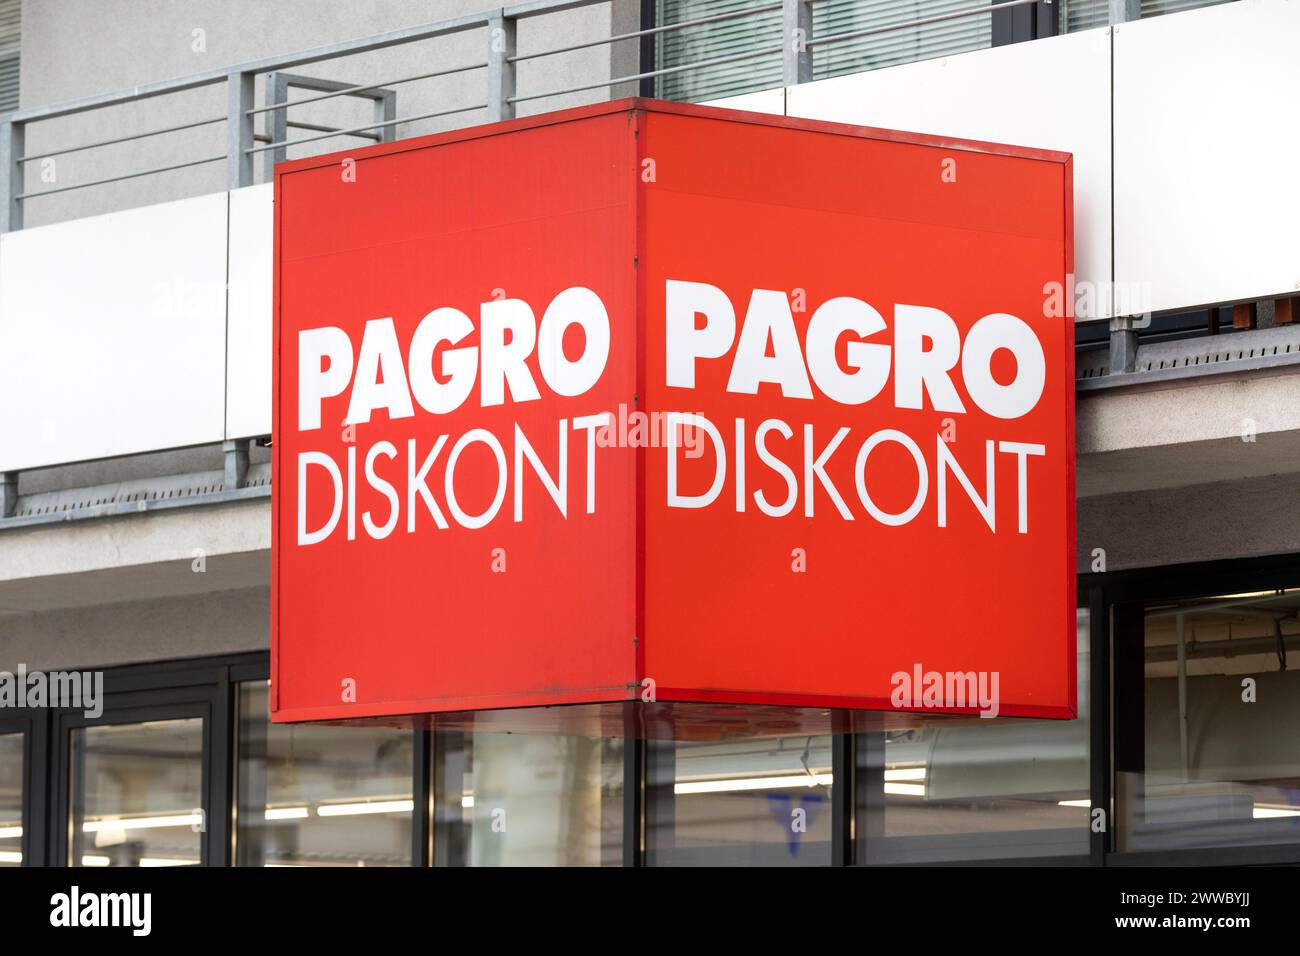 Pagro Discount Stock Photo